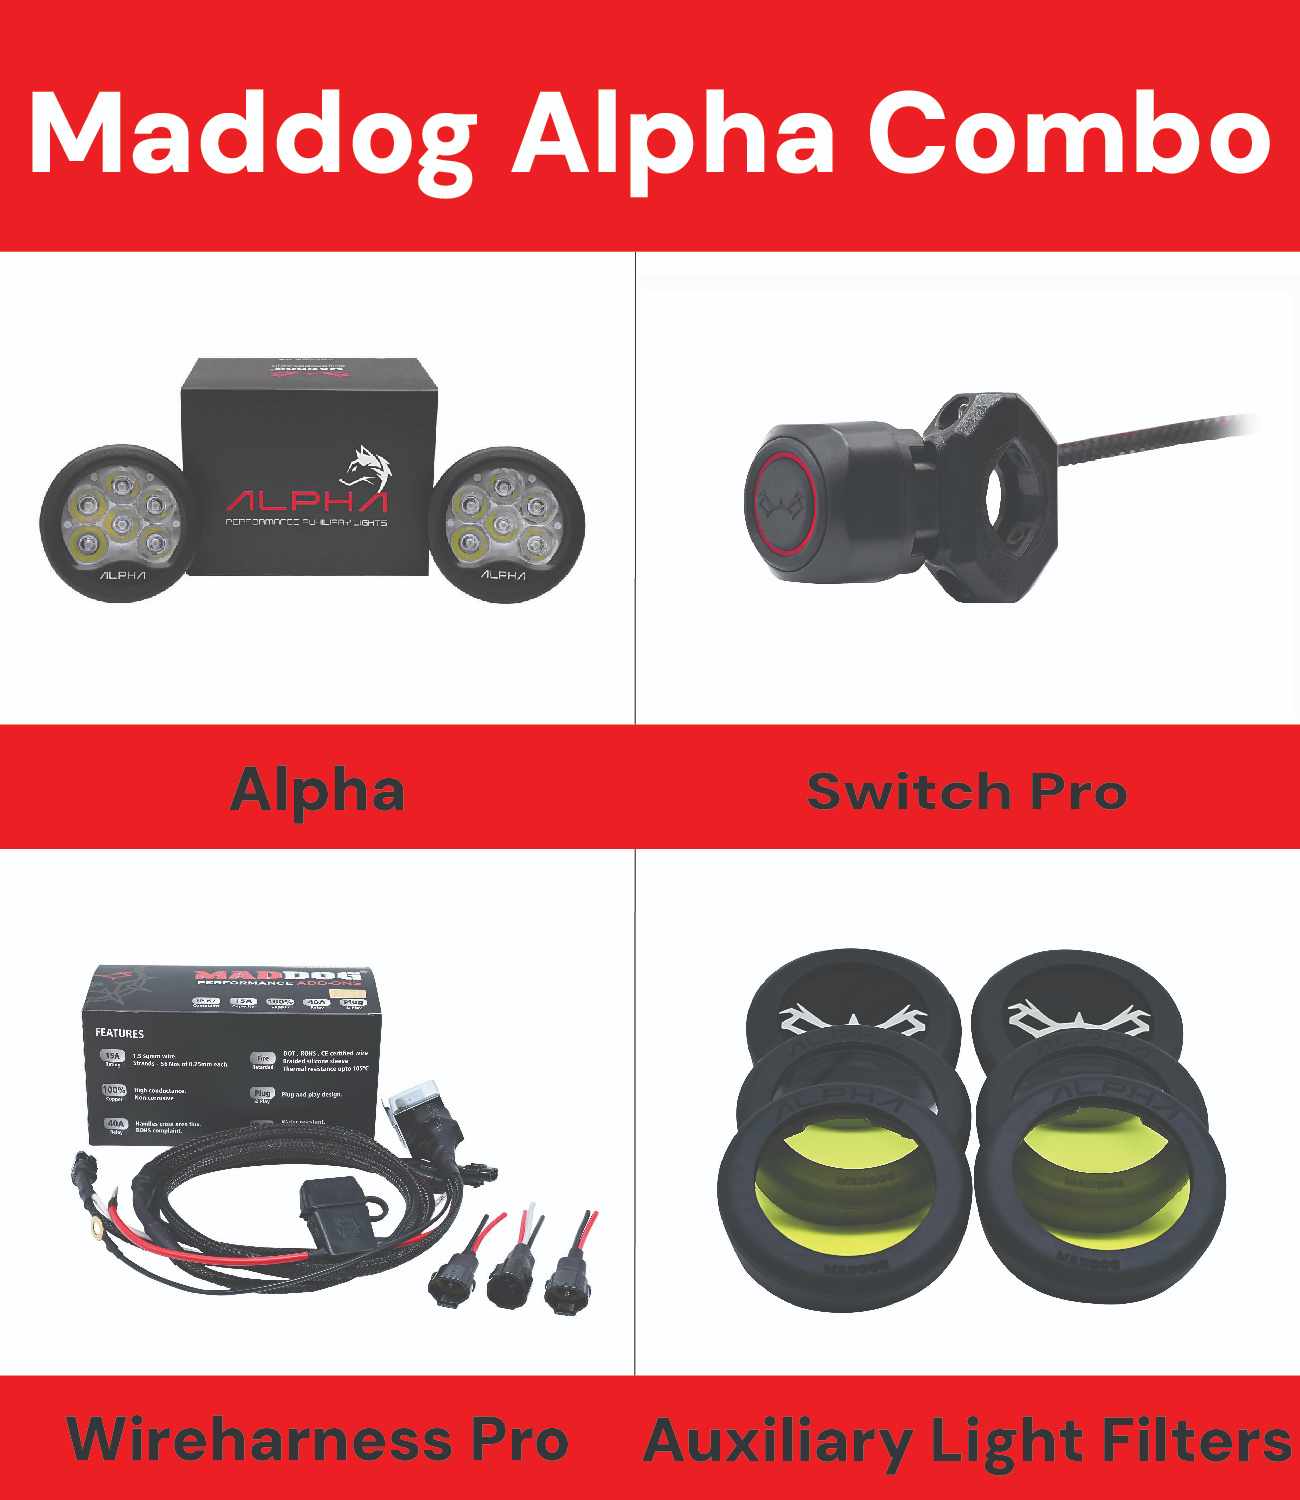 Maddog Alpha Combo